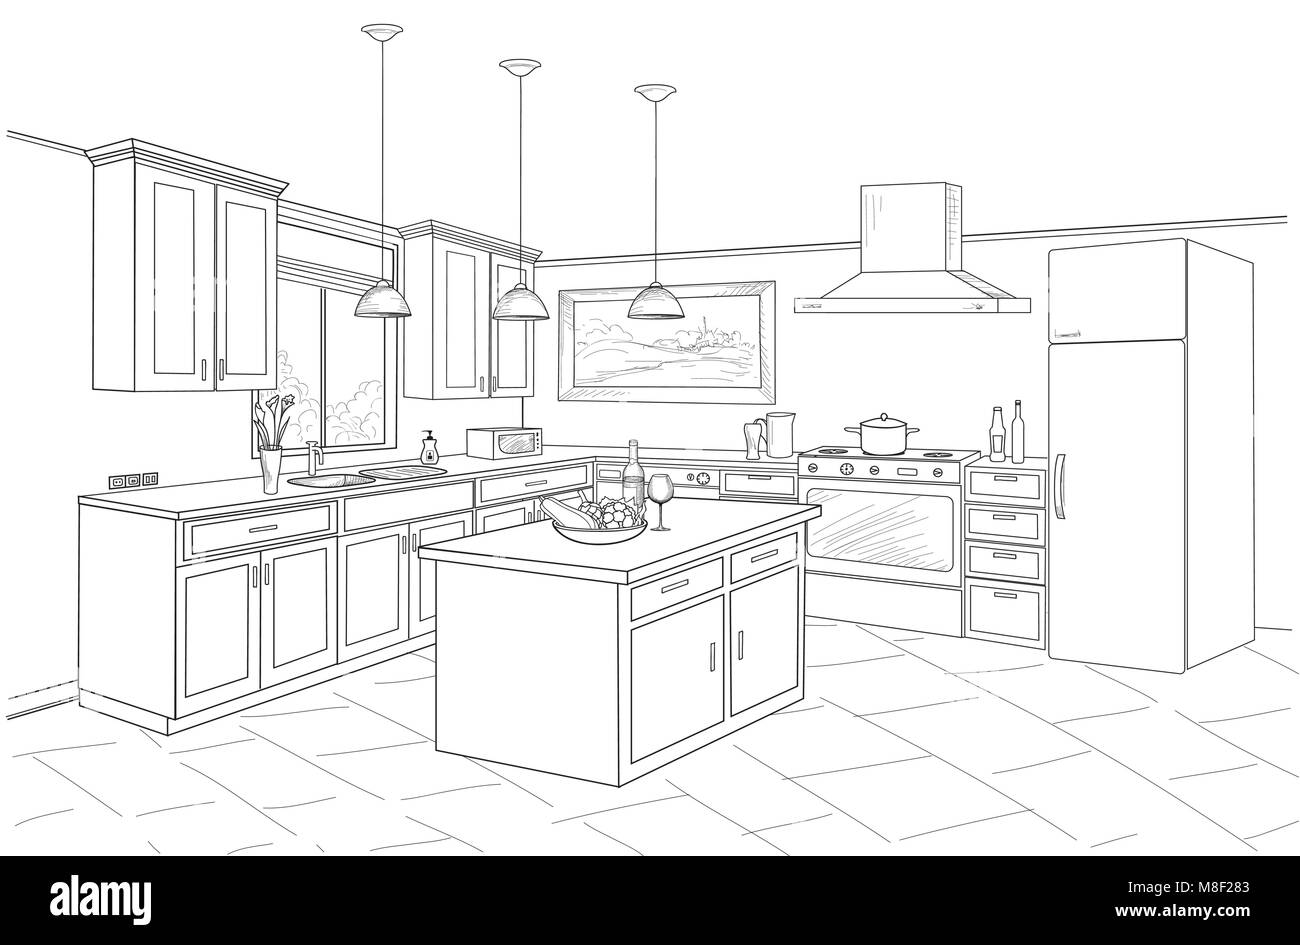 Innenraum Skizze der Küche Zimmer. Entwurf Entwurf Entwurf der Küche mit modernen Möbeln und Insel Stock Vektor